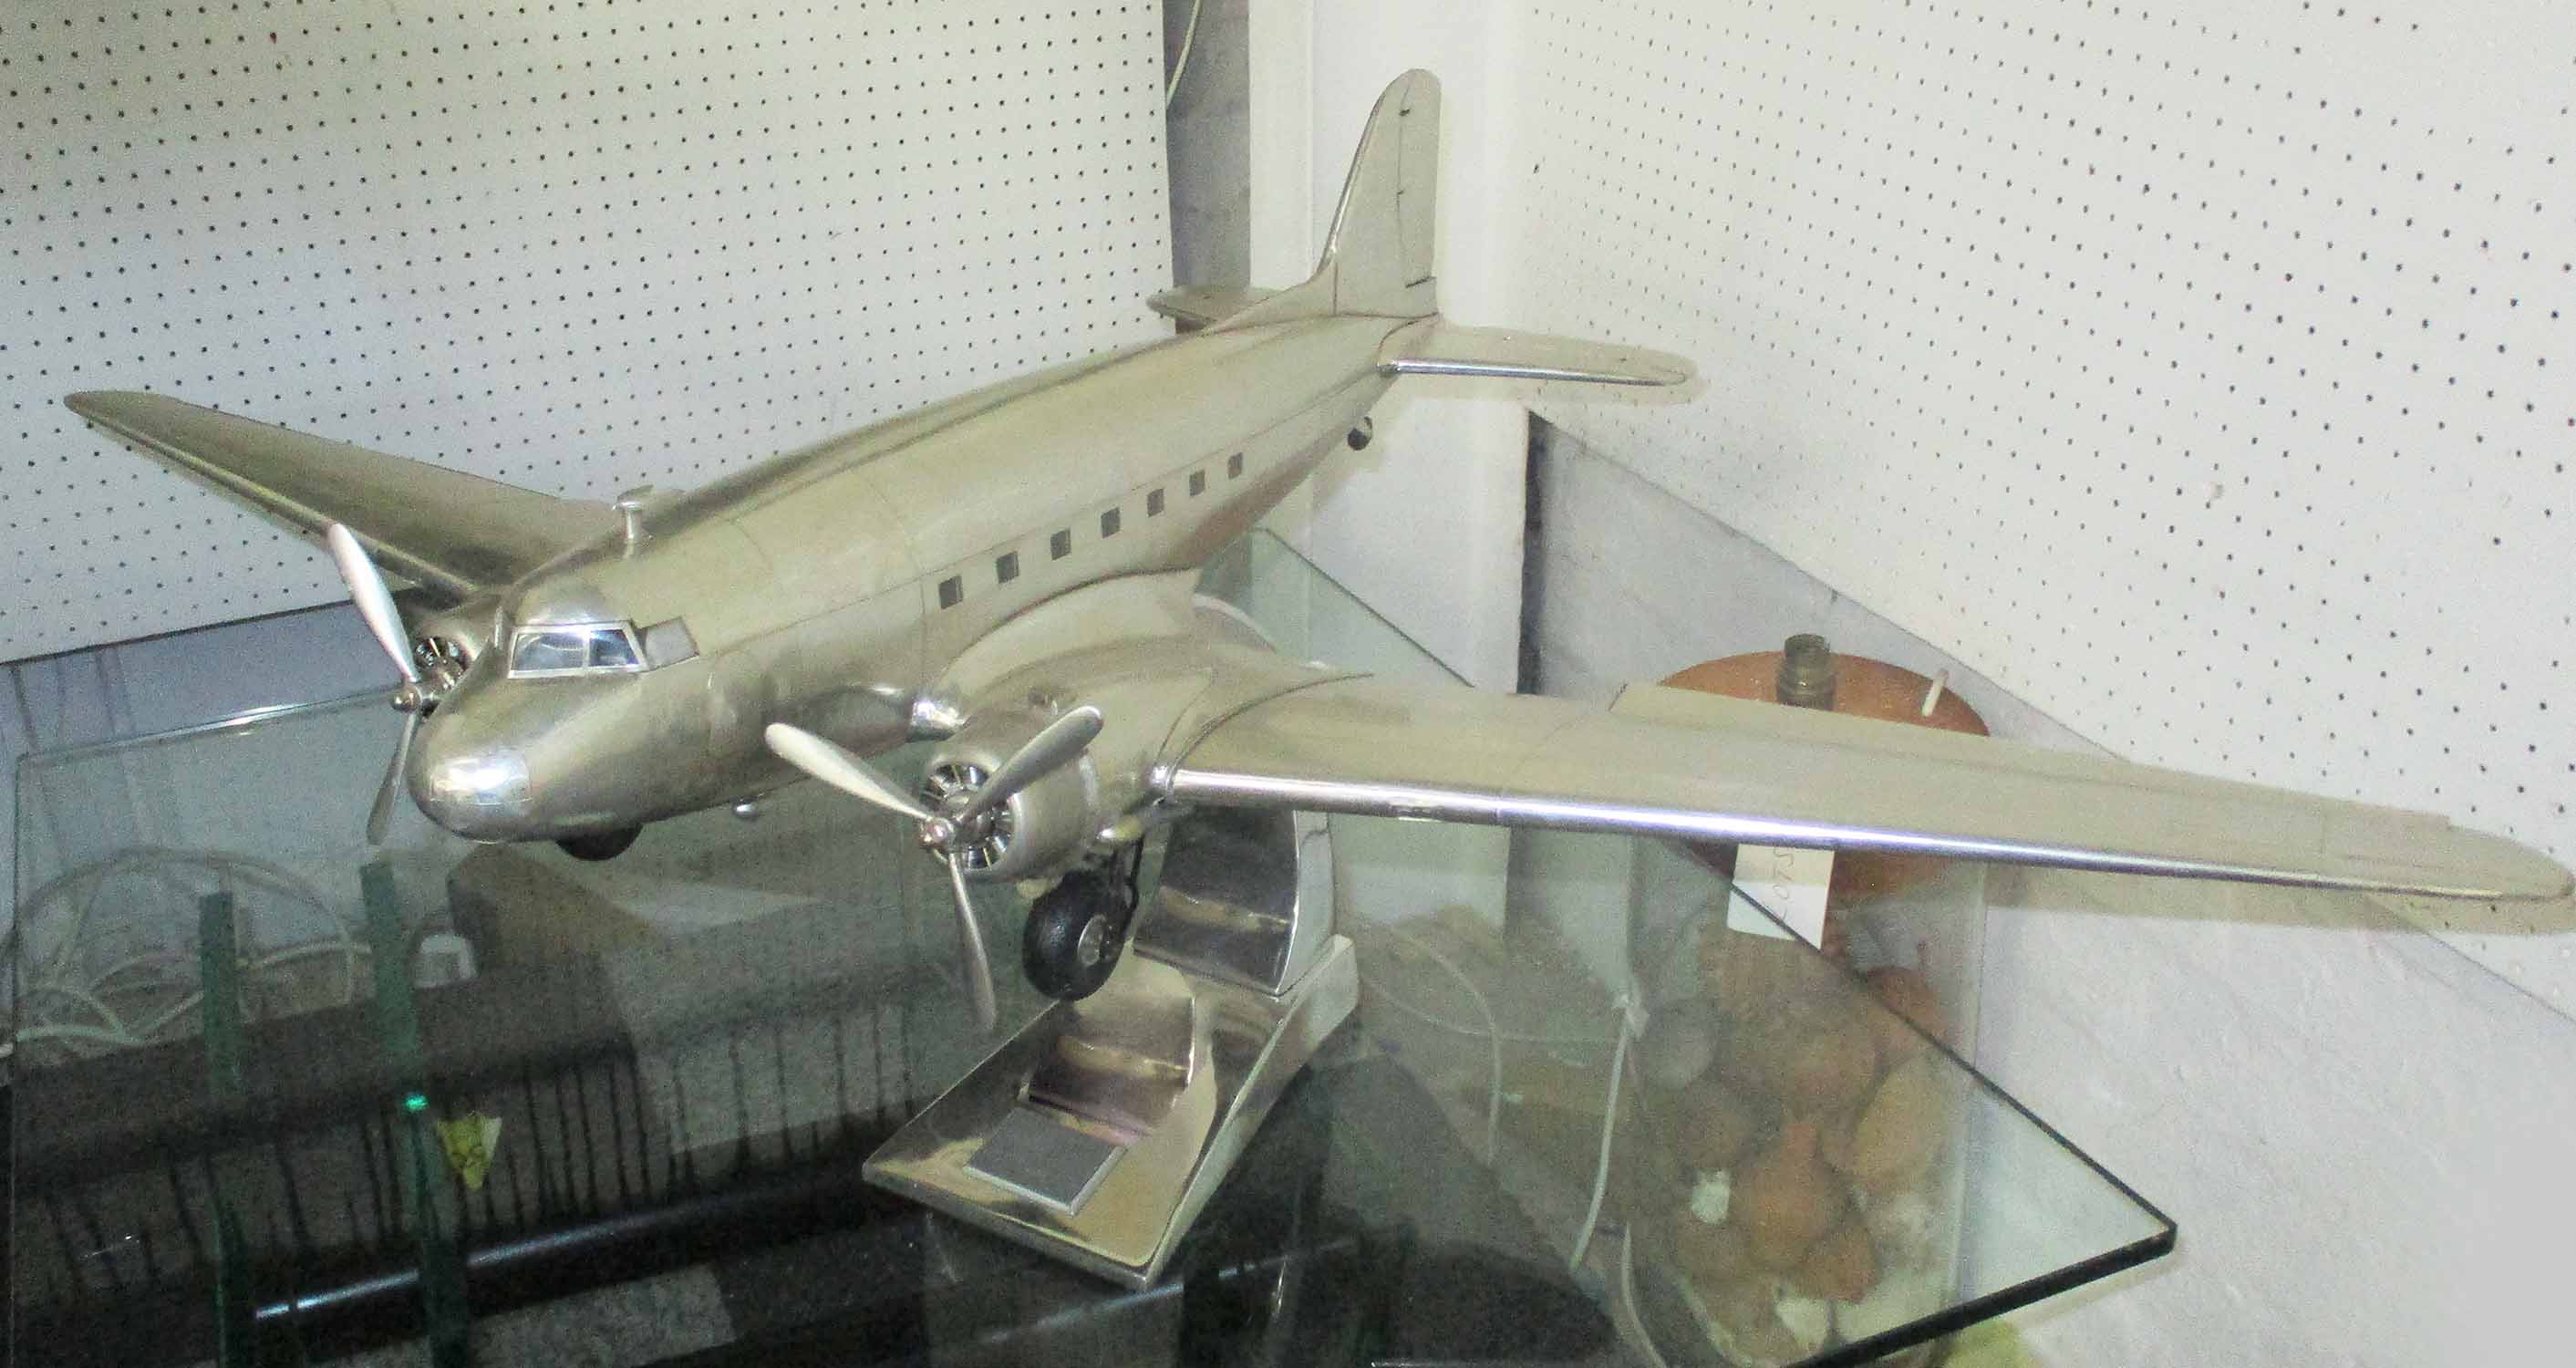 DC3 AIRCRAFT MODEL, in aluminium on stand, 98cm x 66cm x 38cm H.